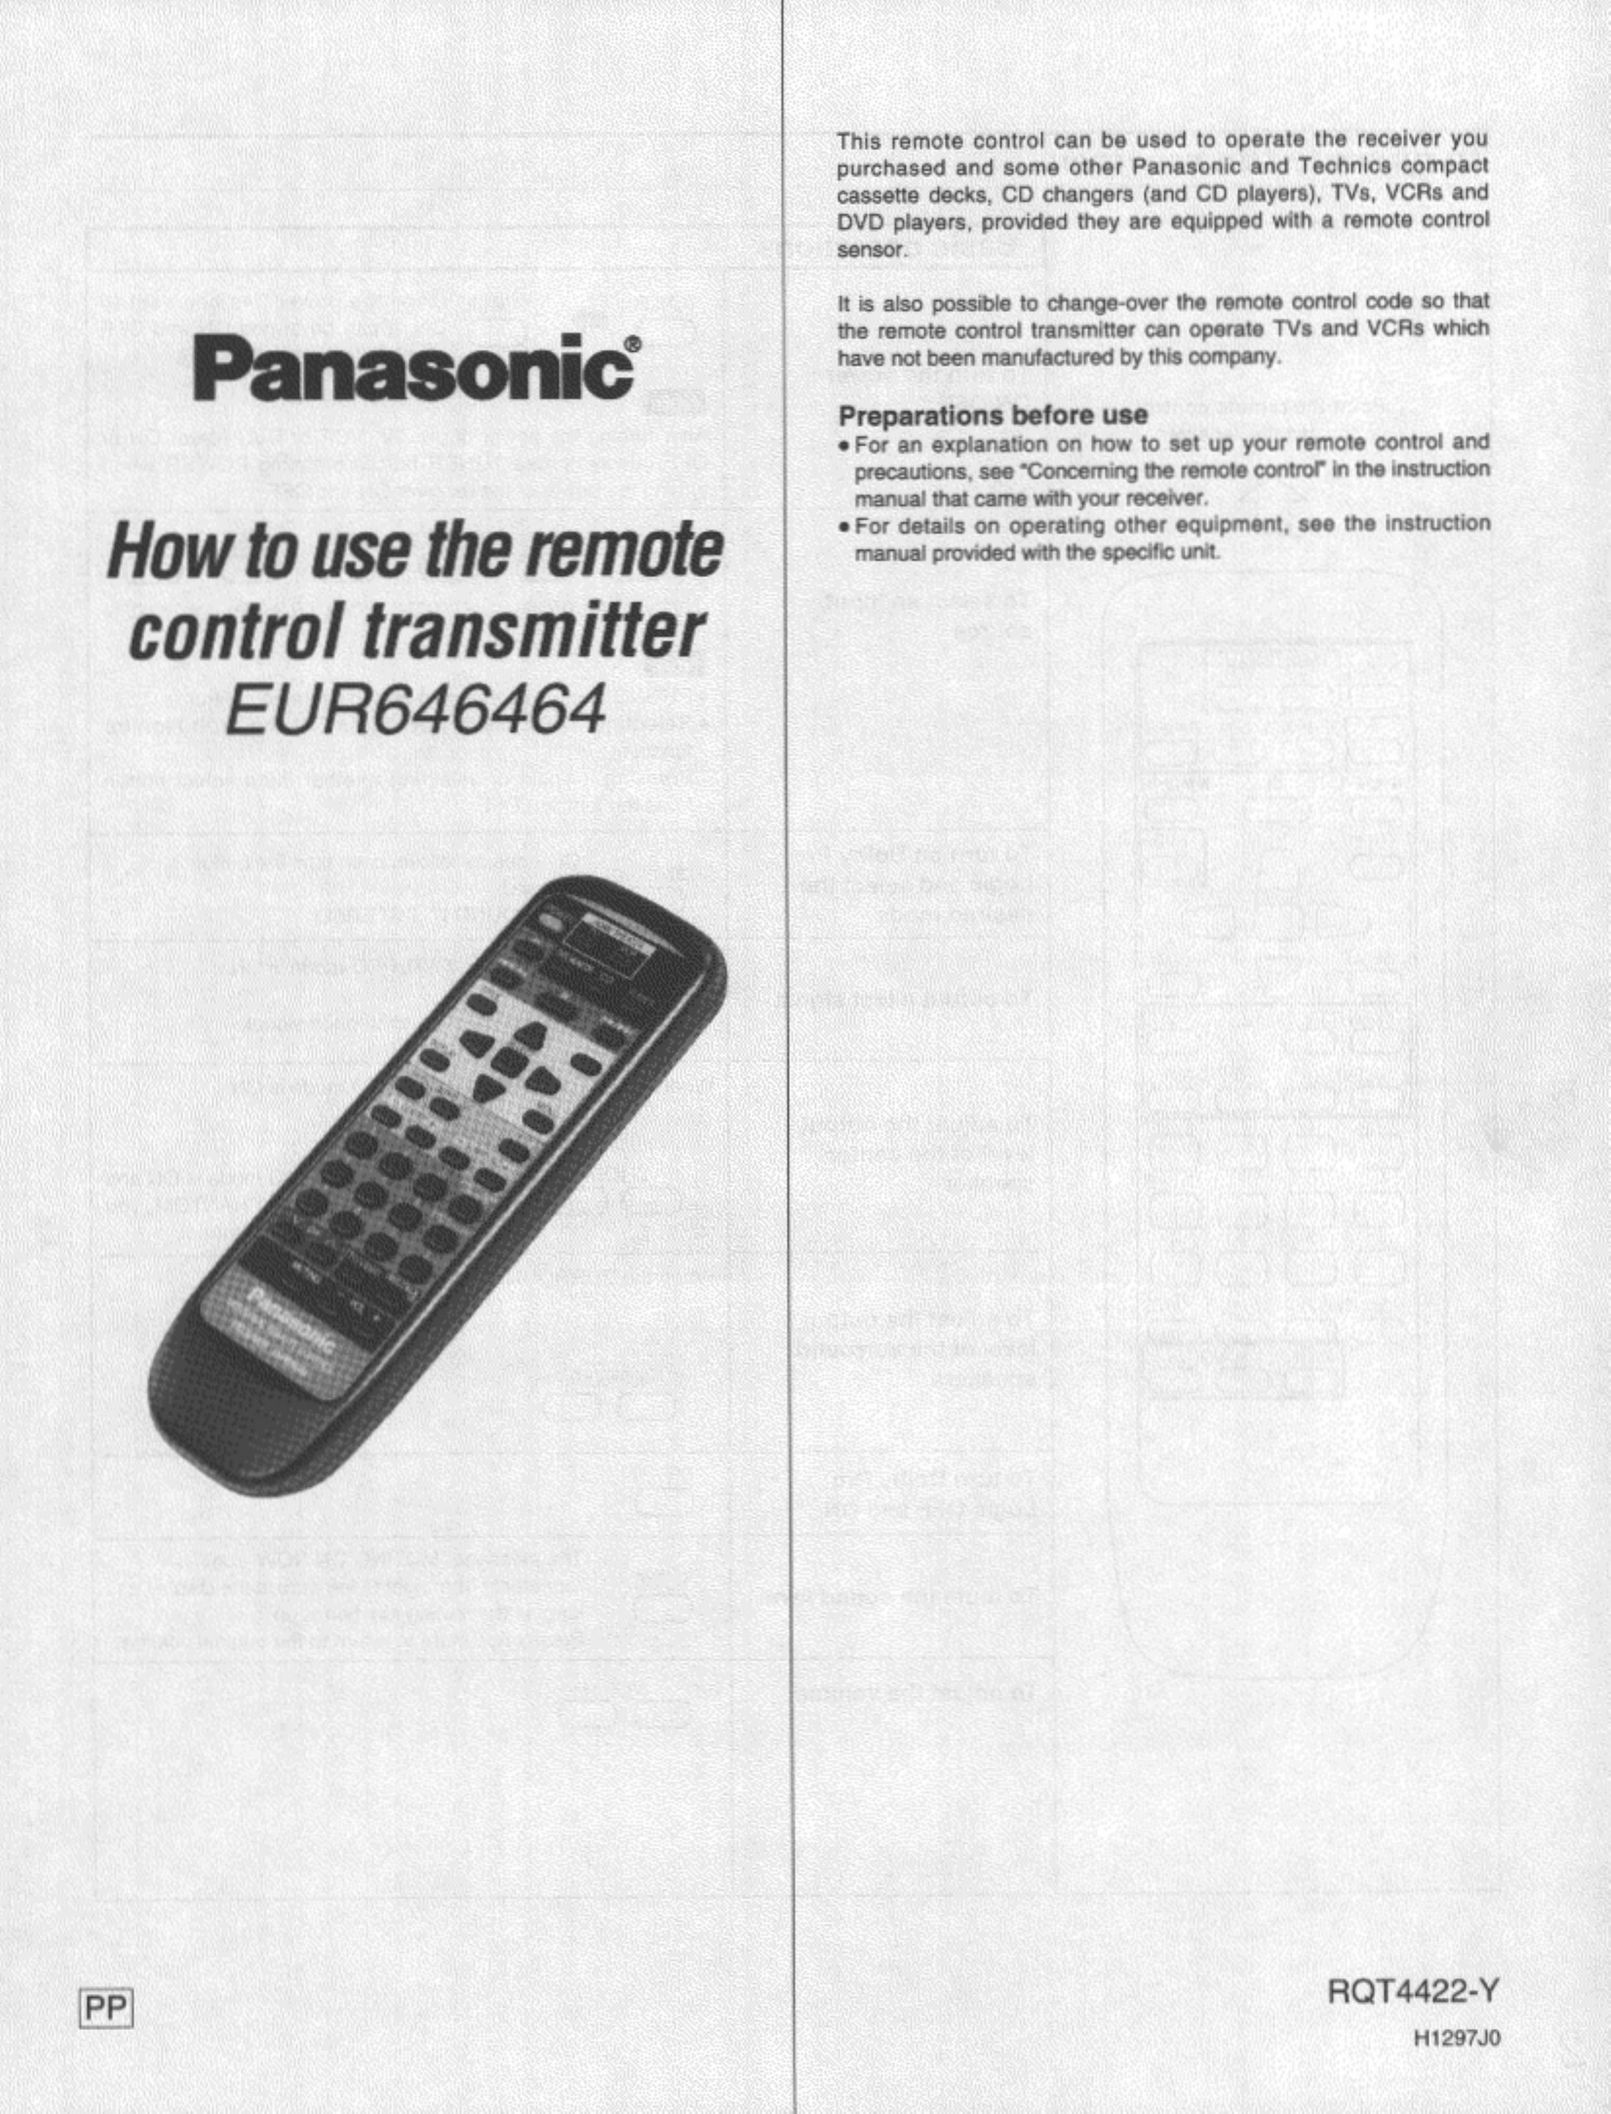 Panasonic EUR646464 Satellite Radio User Manual